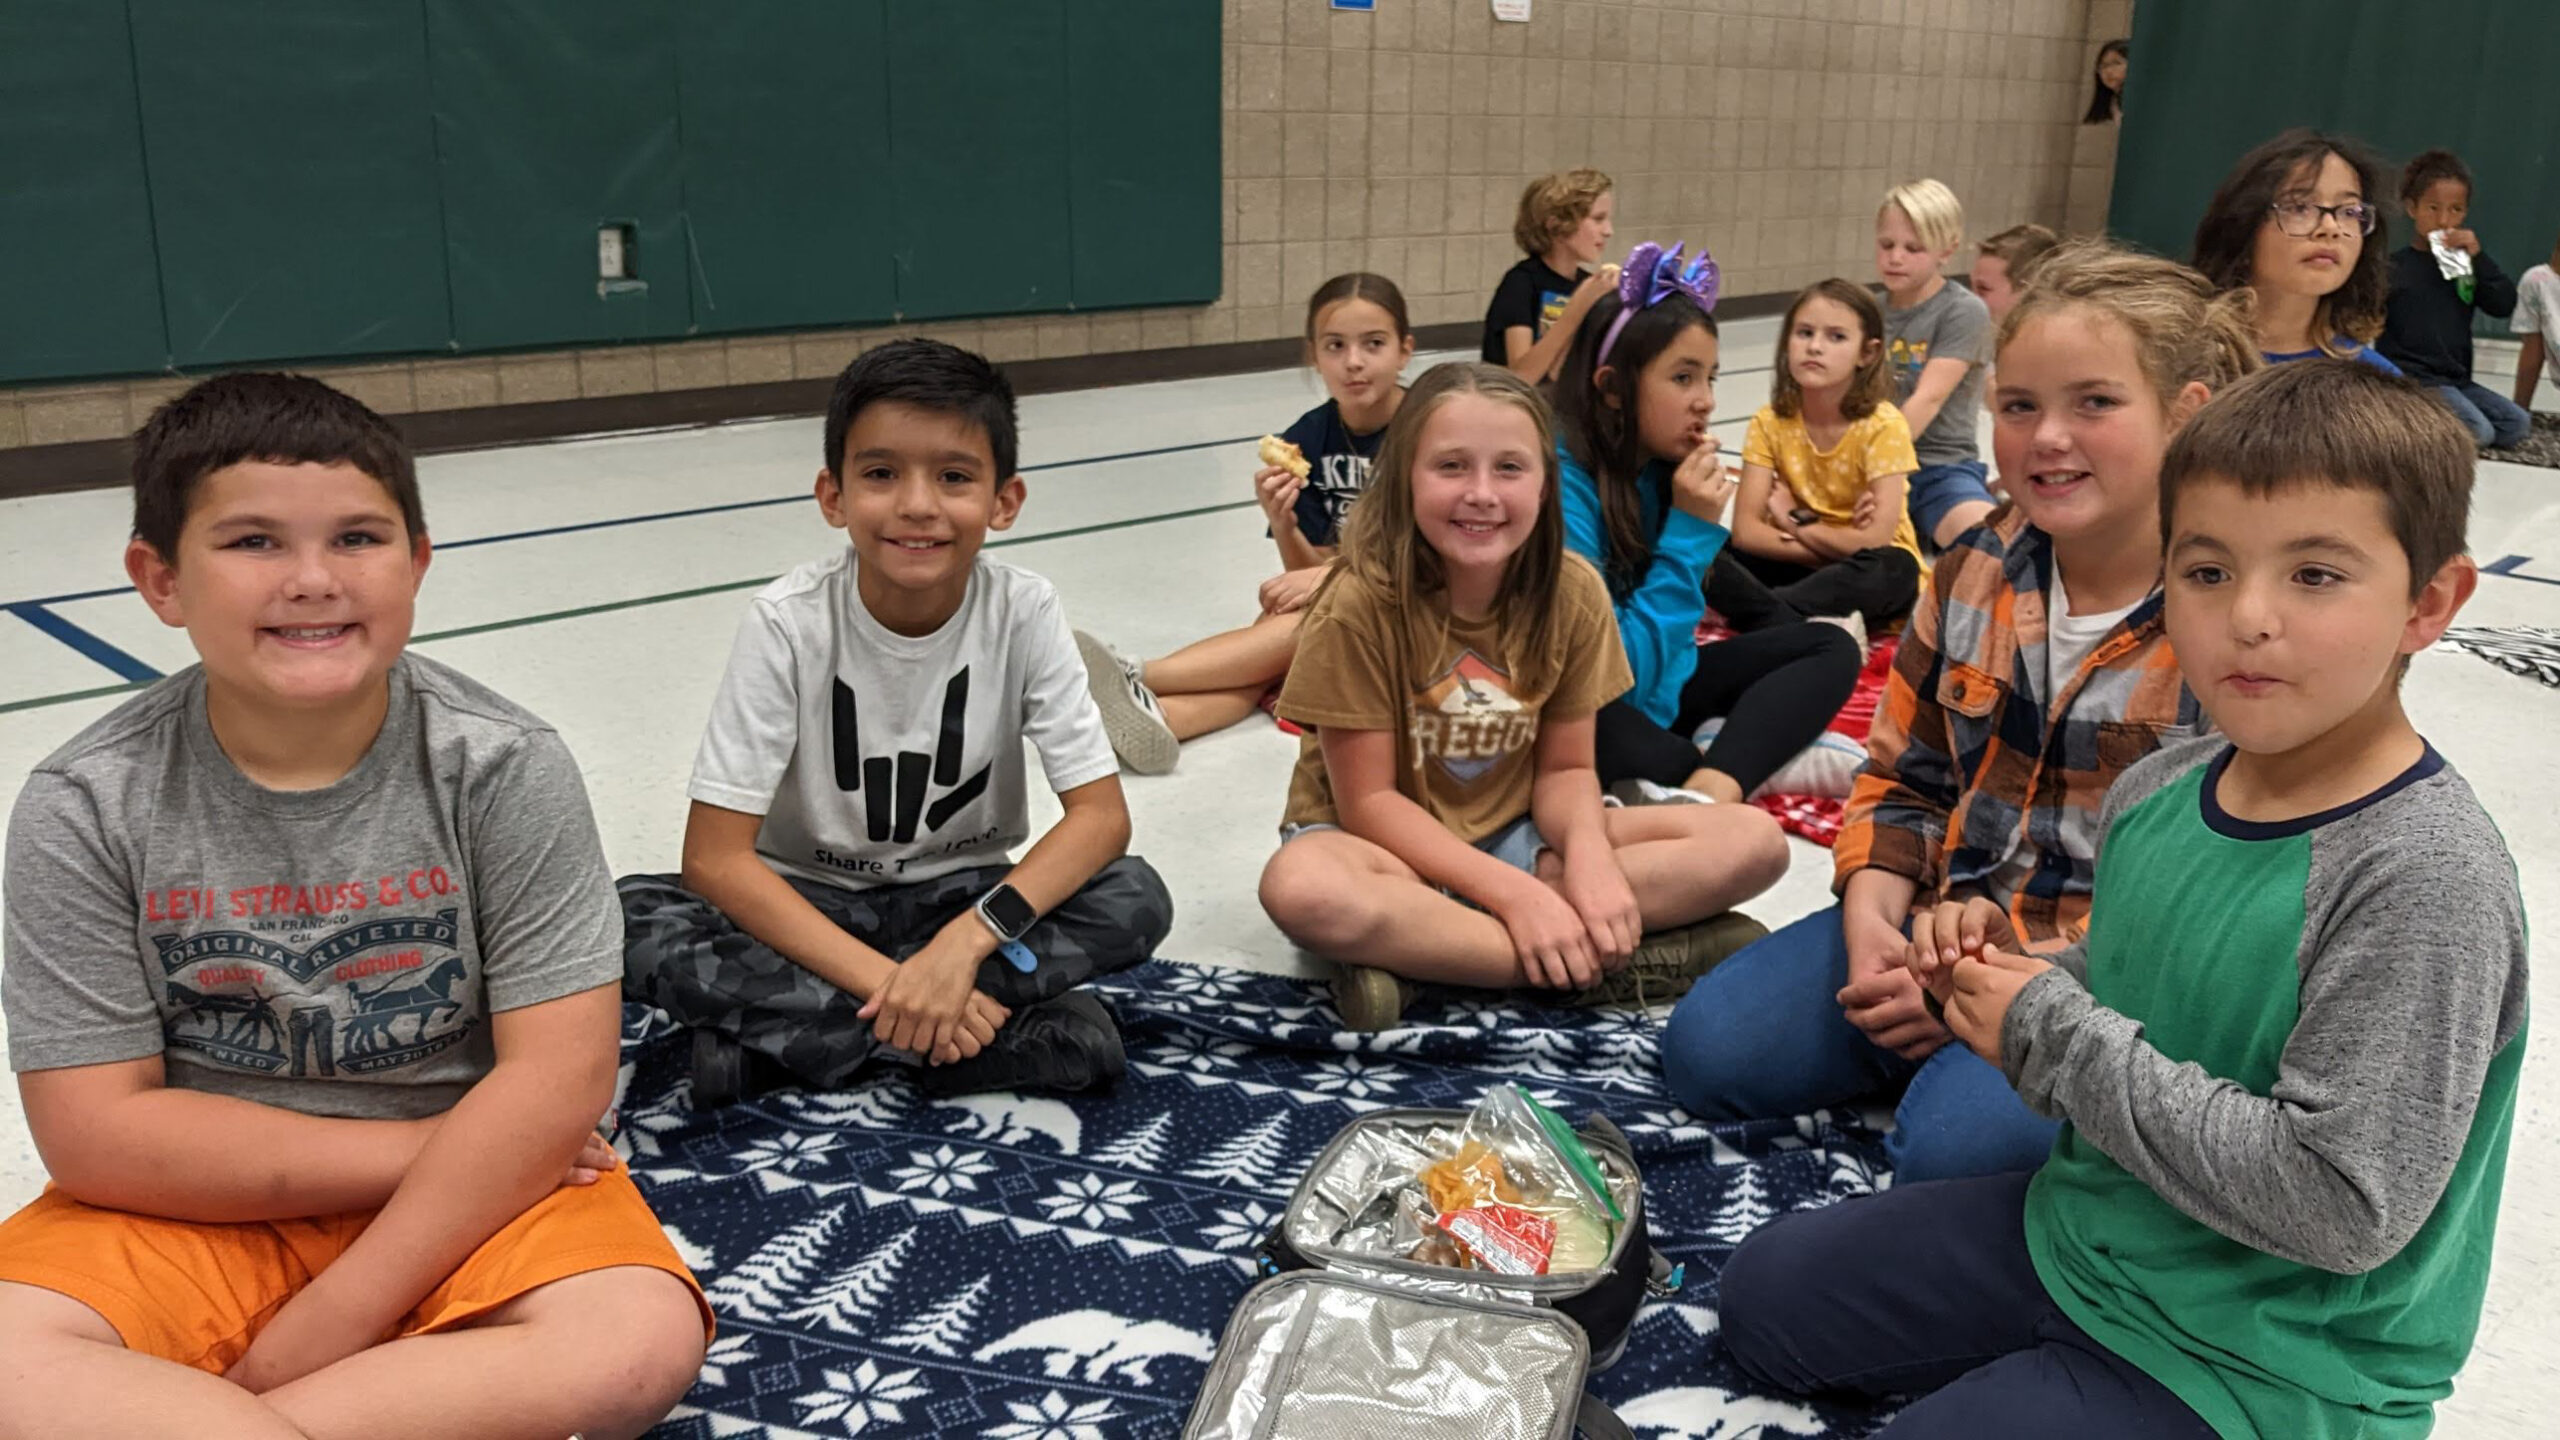 Children enjoying lunch on a blanket.